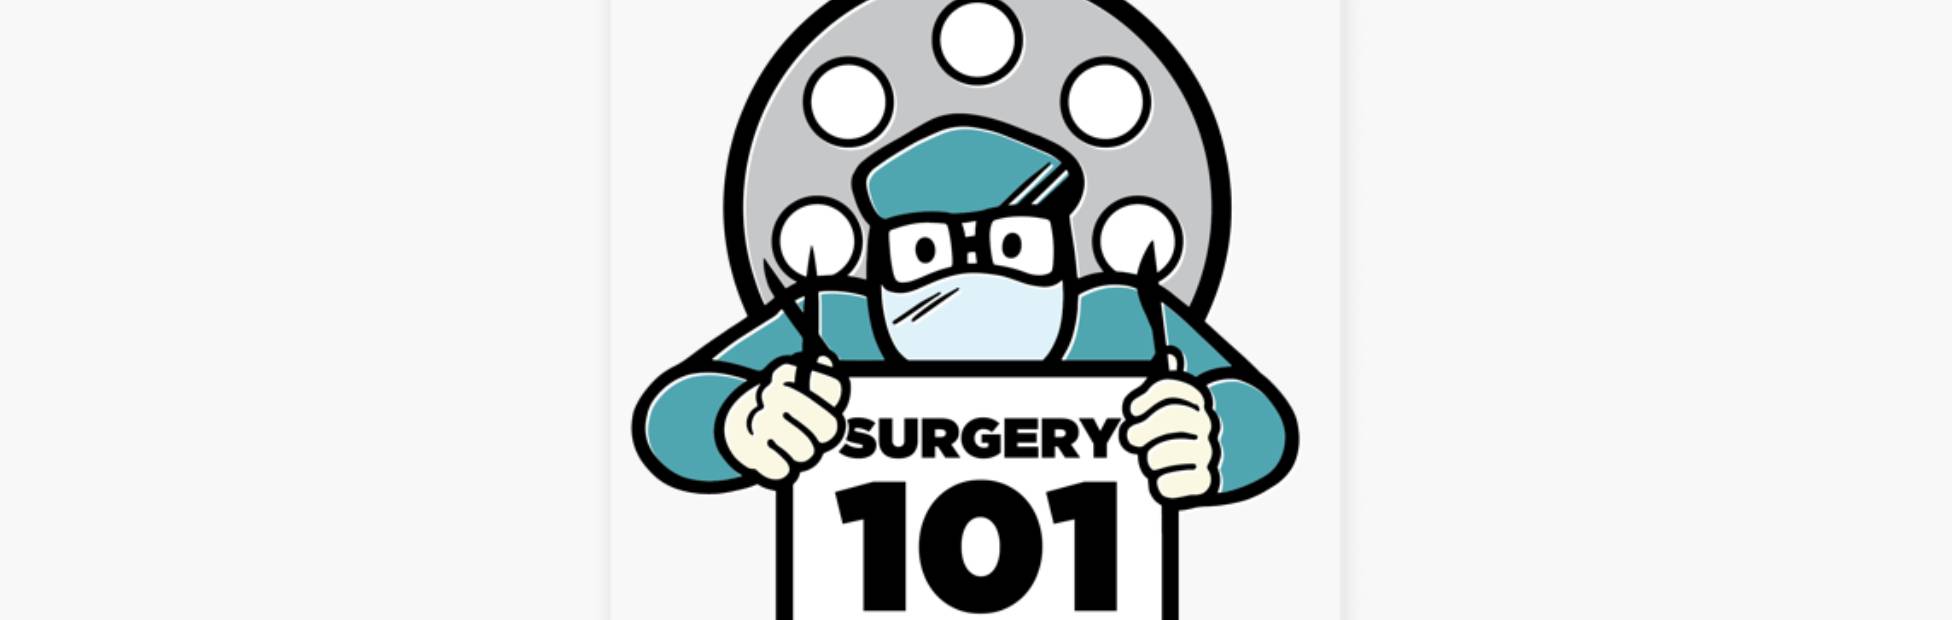 Surgery 101 logo